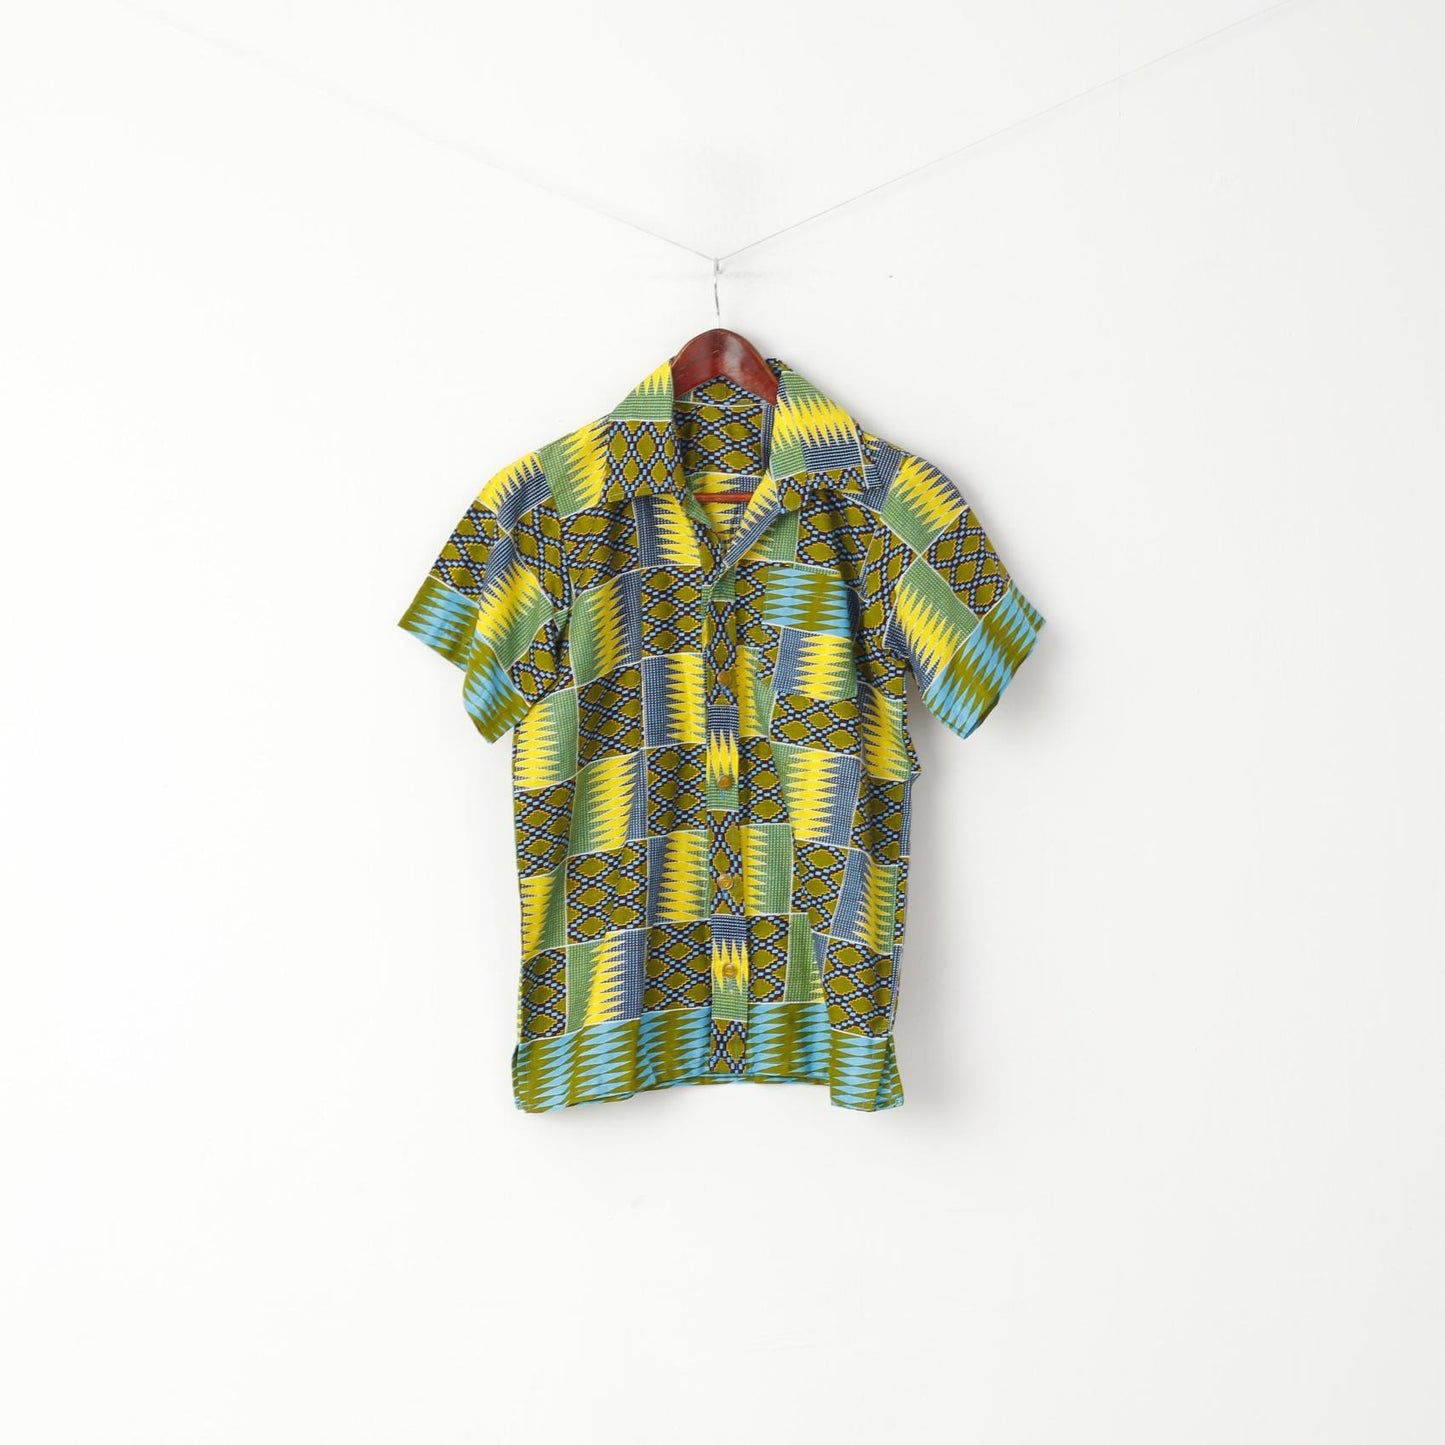 Saitino Boys 14 Age Casual Shirt Multicoloured Handmade Short Sleeve Summer Top